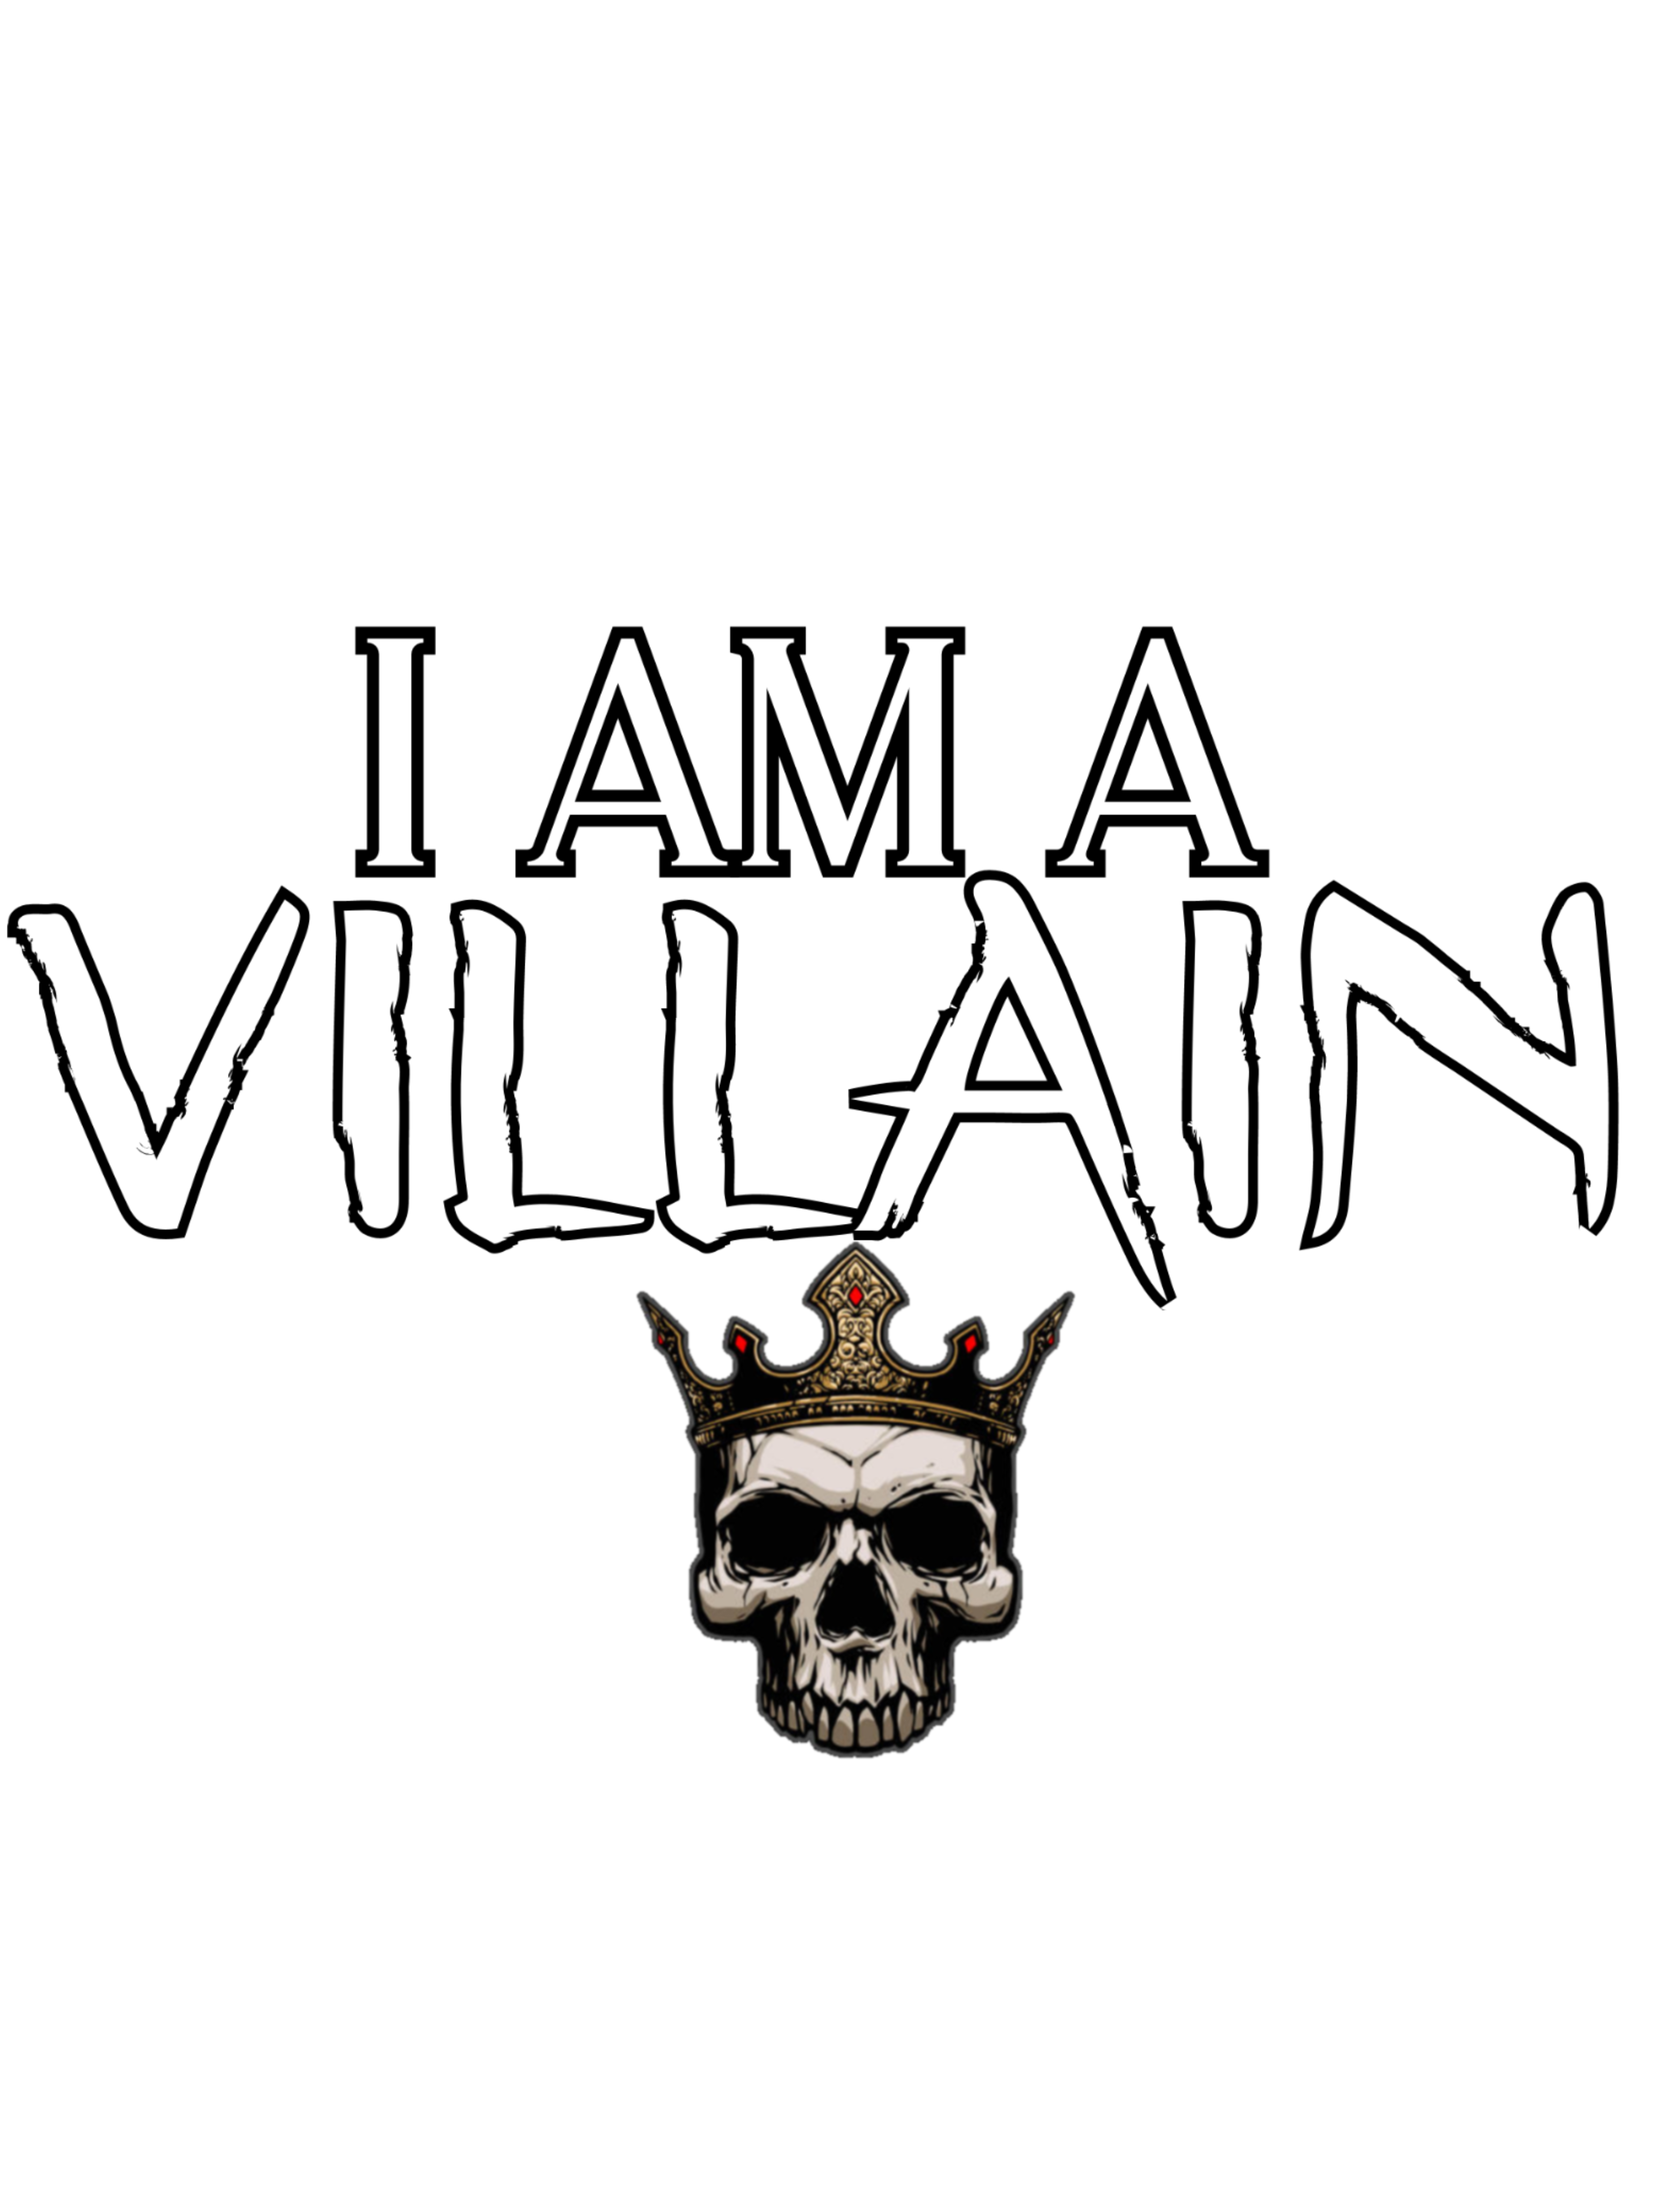 Villain-Logo by TheWrestlingVillain on DeviantArt